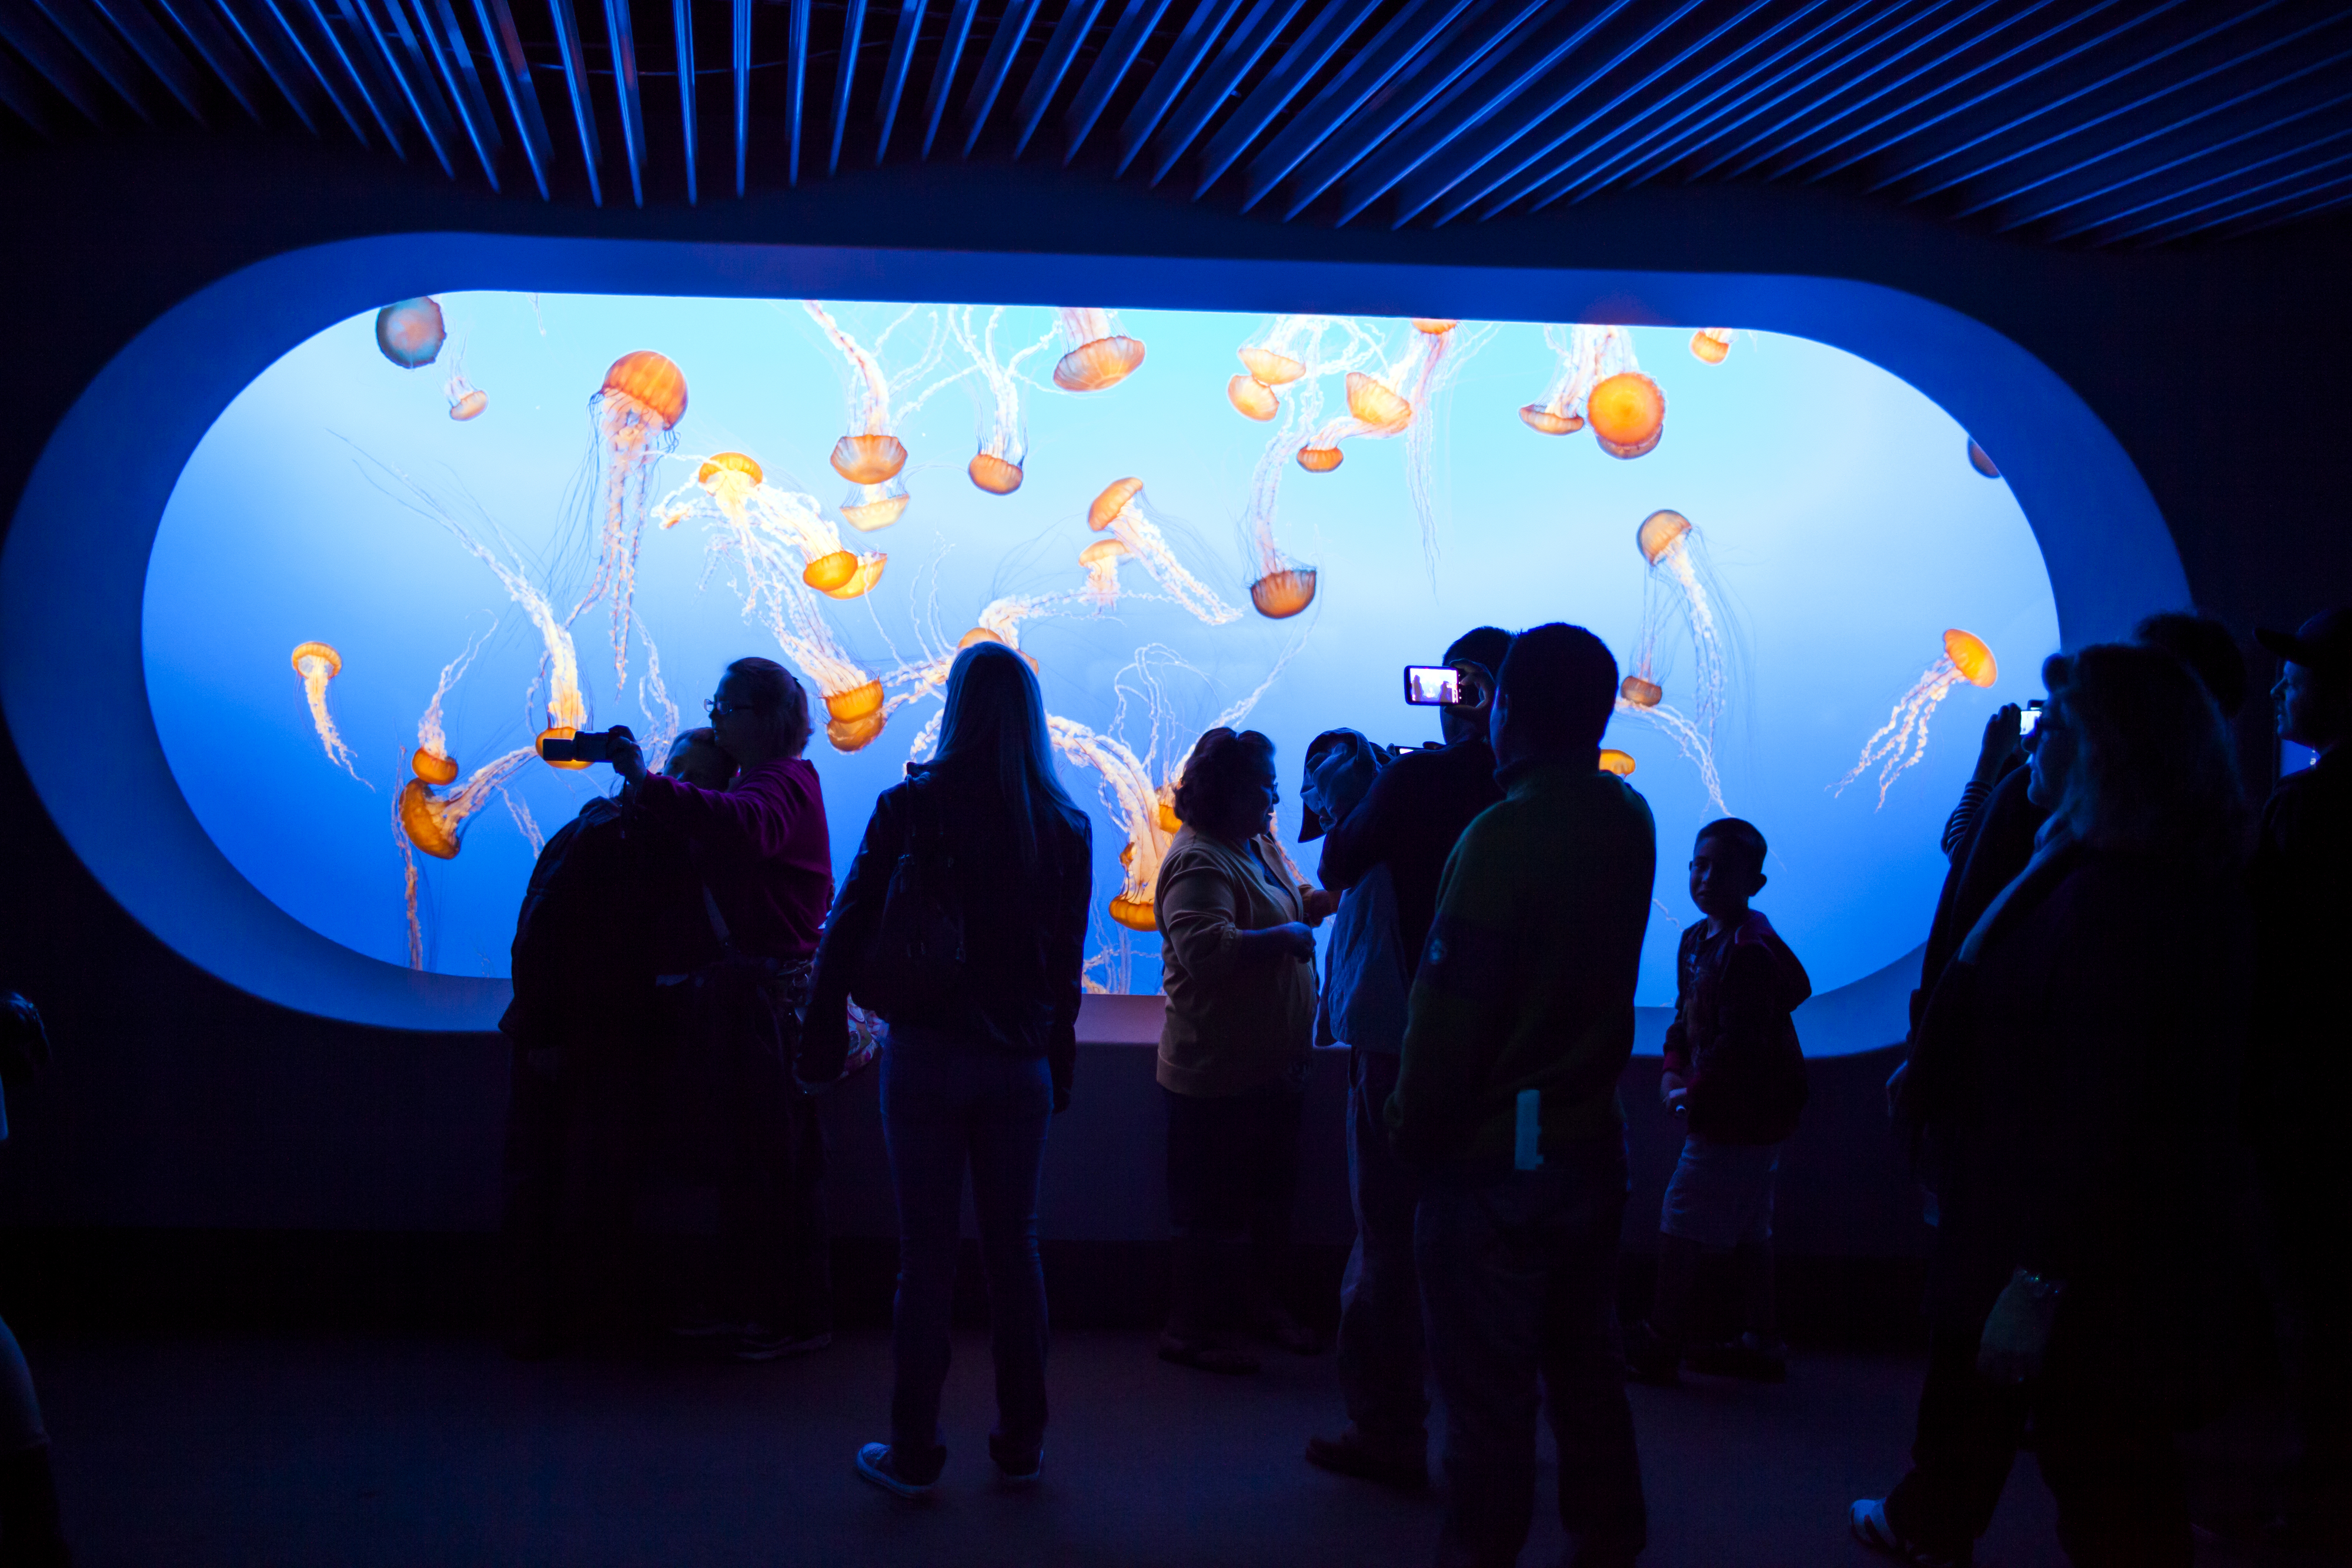 Visitors observing jellyfish in a large aquarium display at an aquatic center